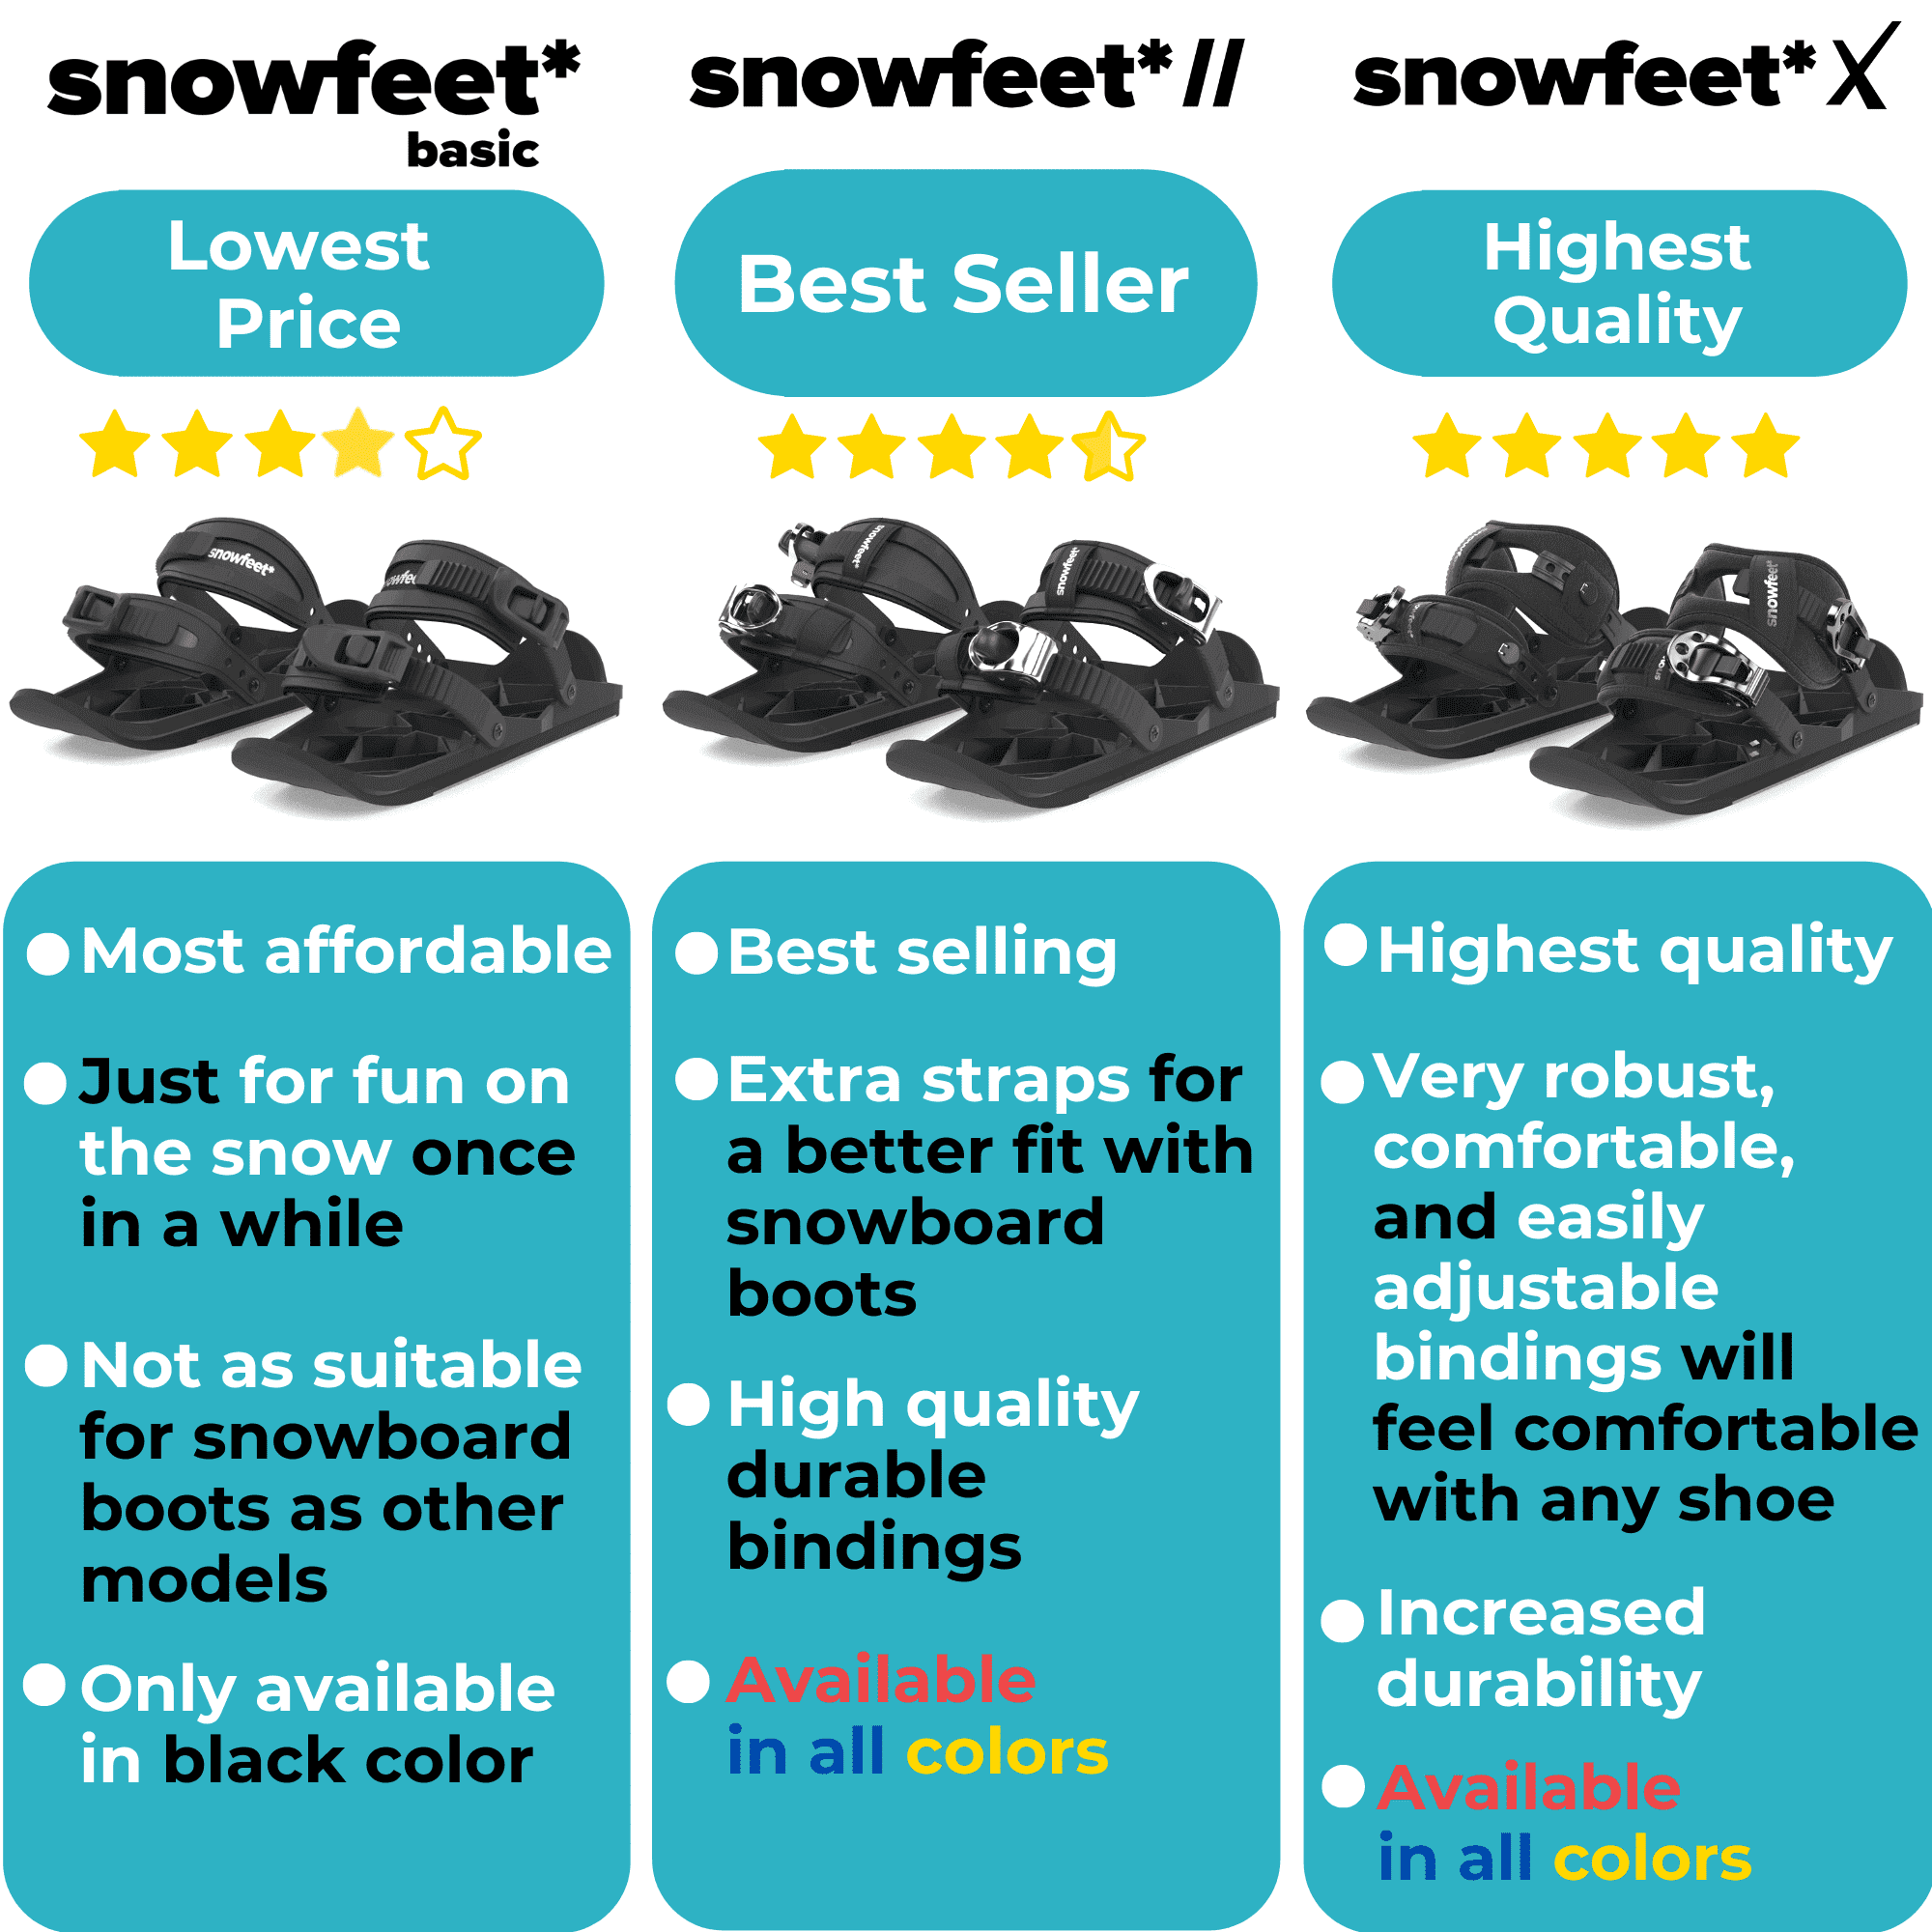 snowfeet models comparison 